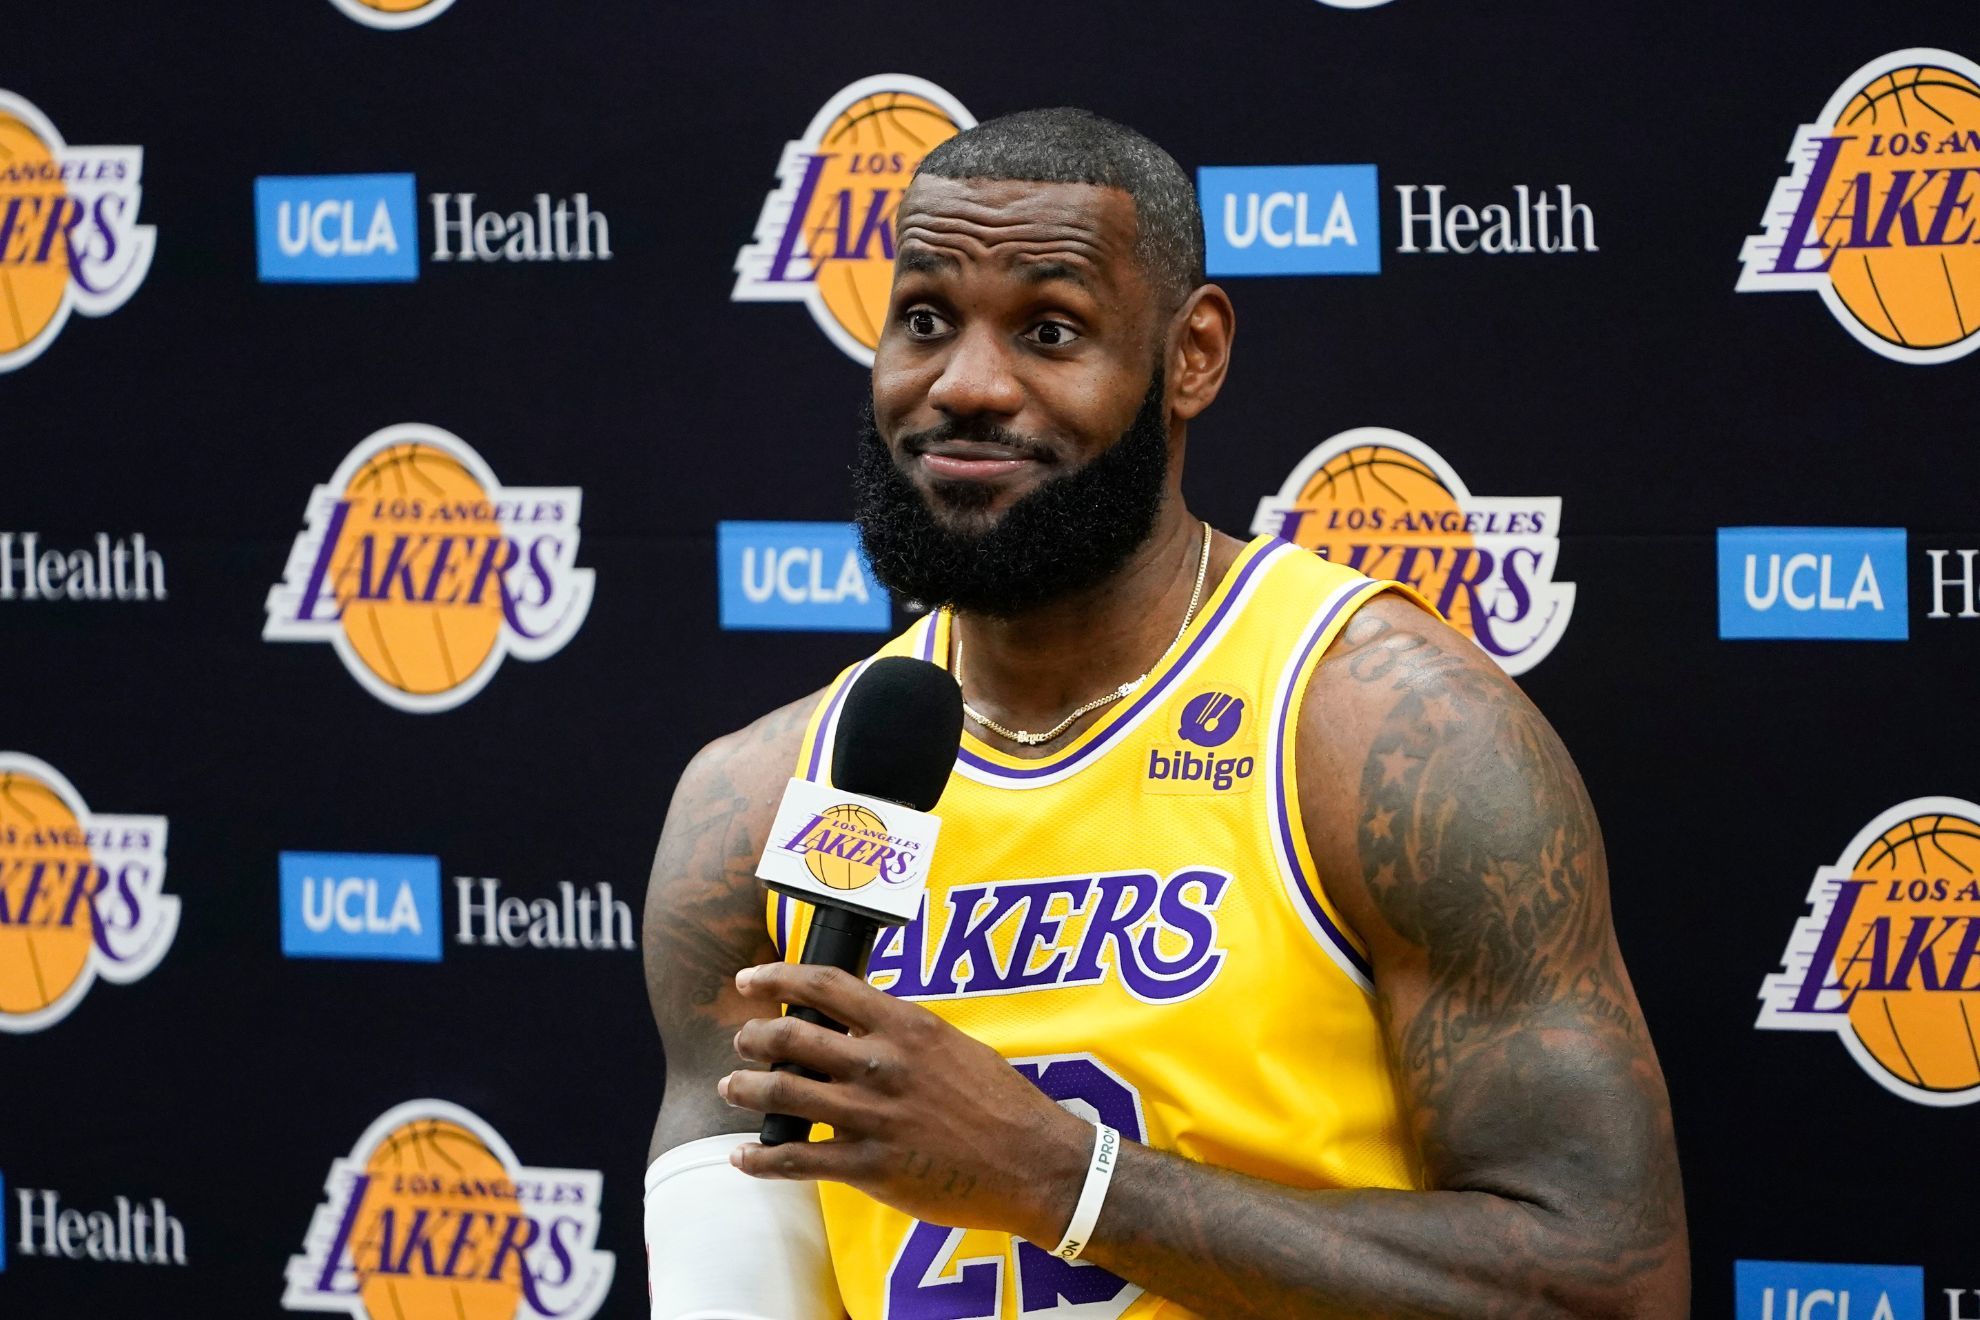 Lakers star LeBron James dedicates season to son Bronny - Los Angeles Times